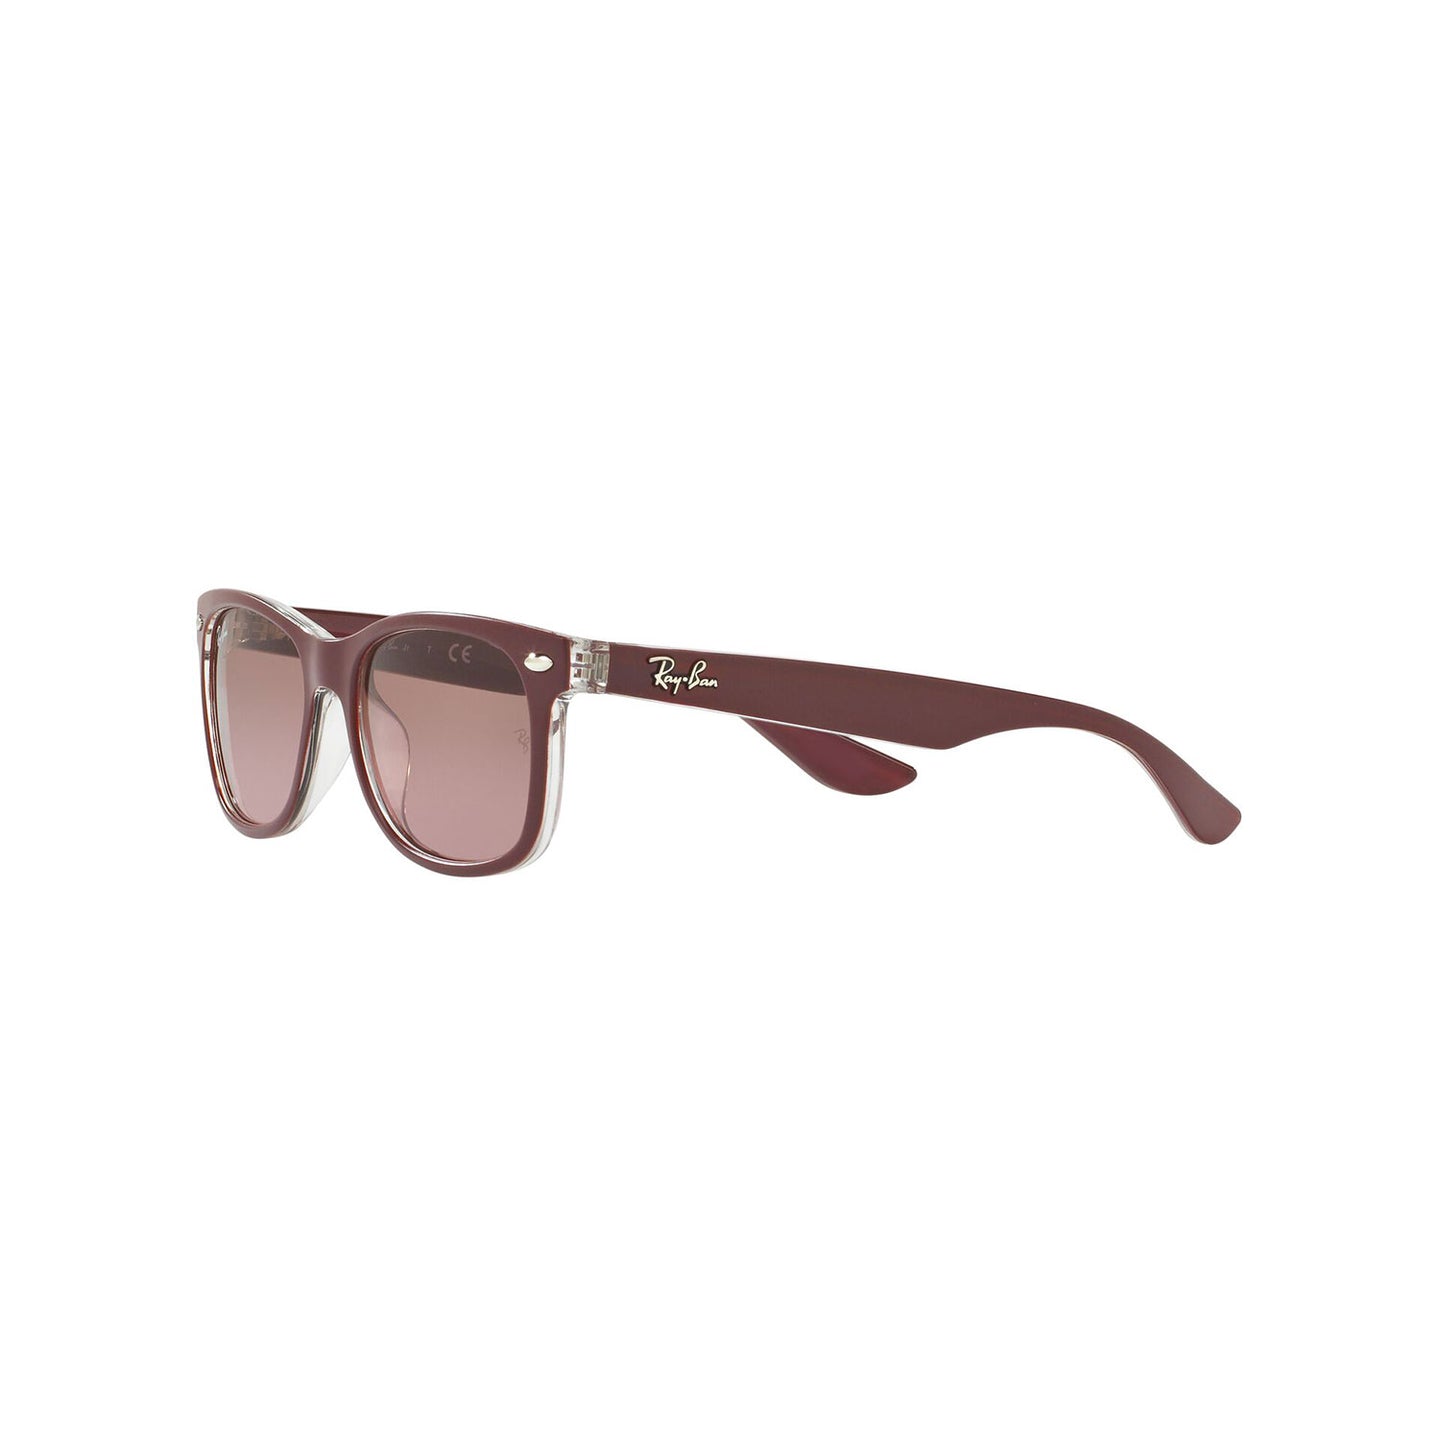 sunglasses ray ban model rj 9052s color  7024/14